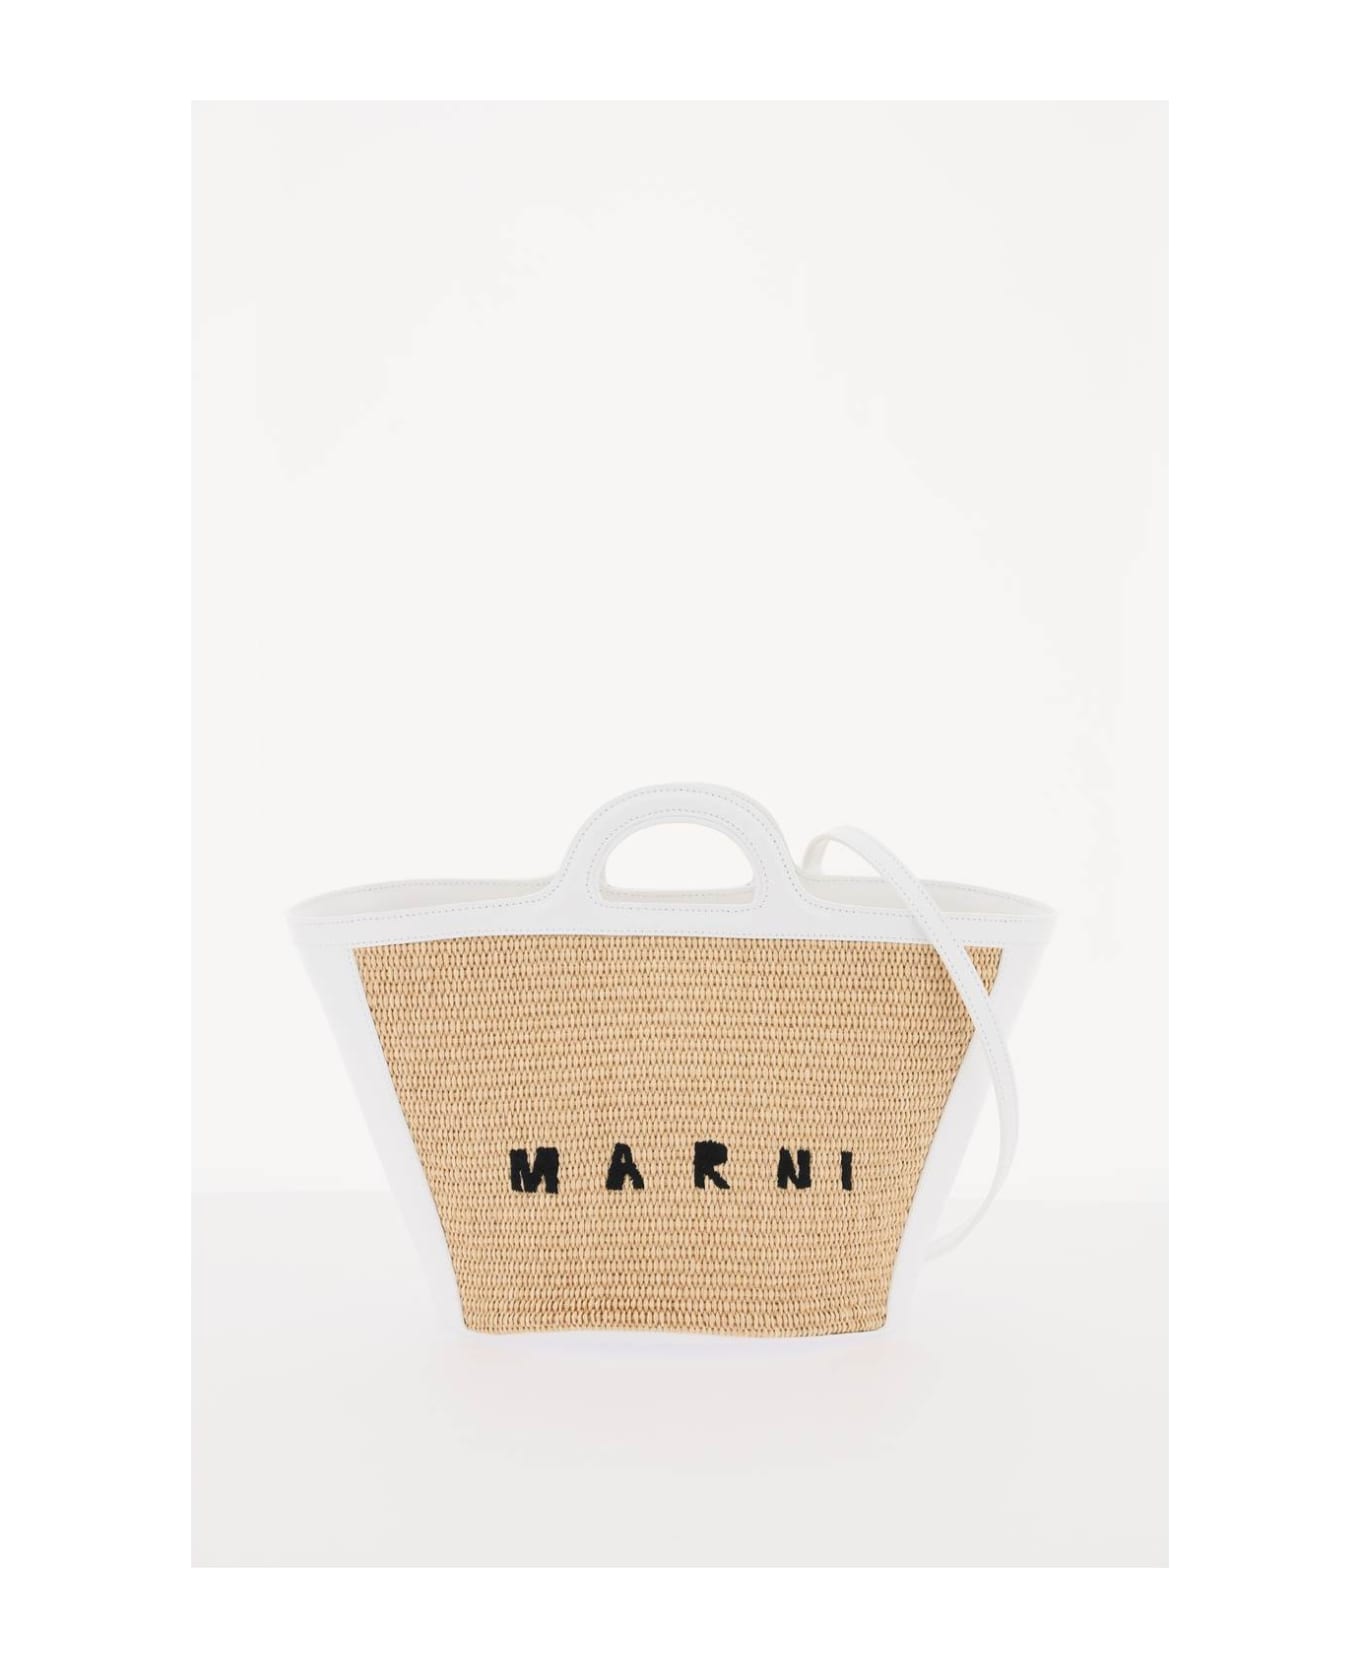 Marni Tropicalia Small Handbag - SAND STORM LILY WHITE (Beige)